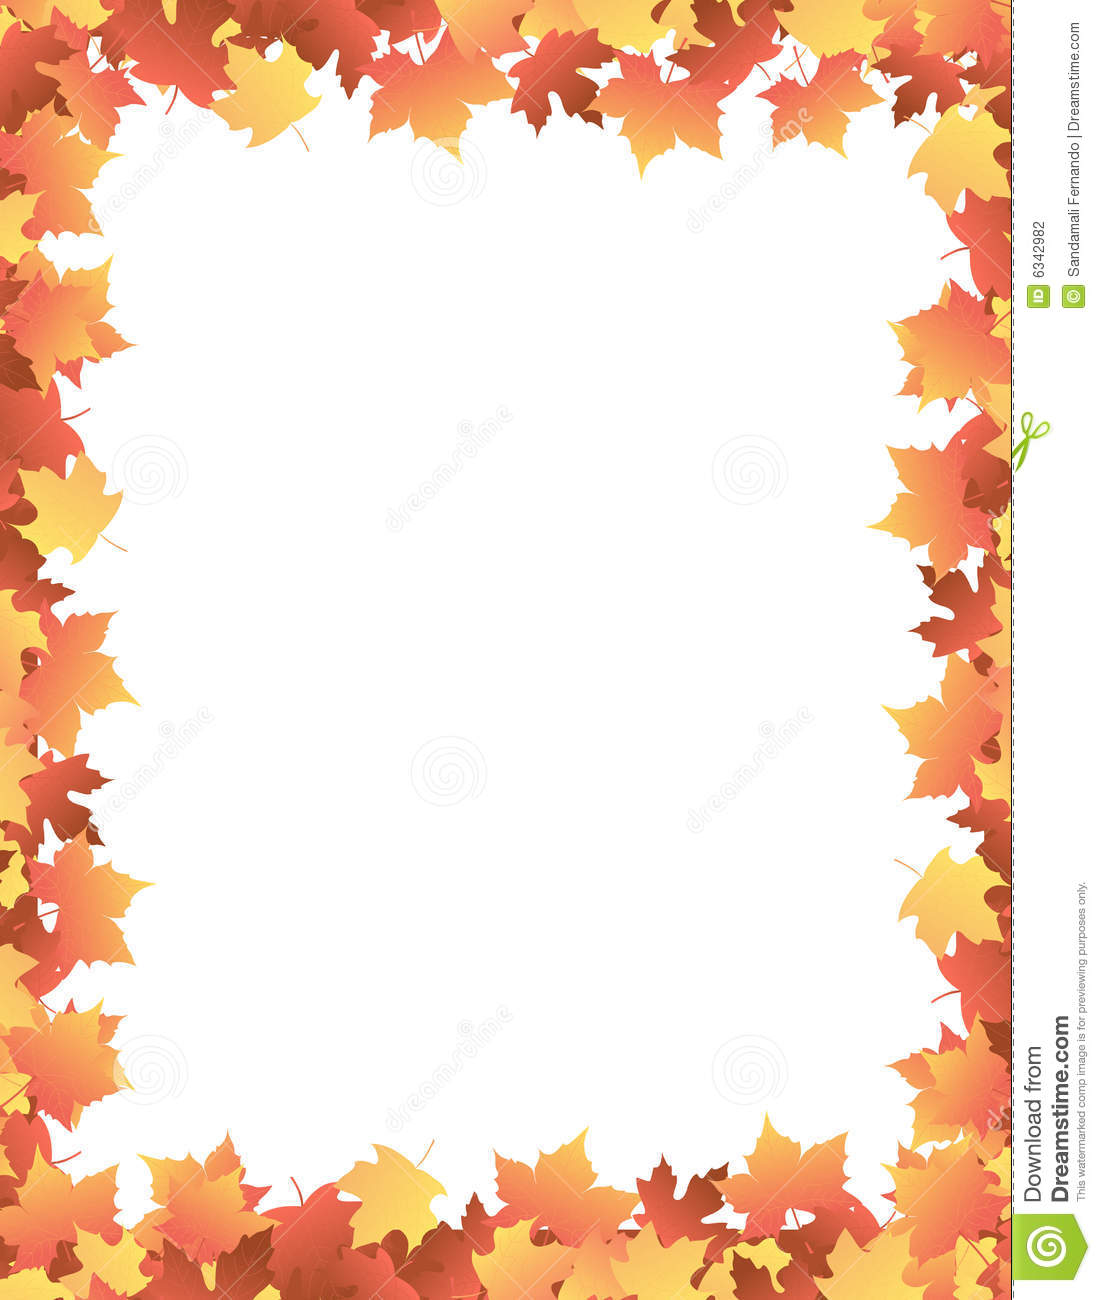 Fall Leaves Clip Art Border R - Fall Leaves Border Clip Art